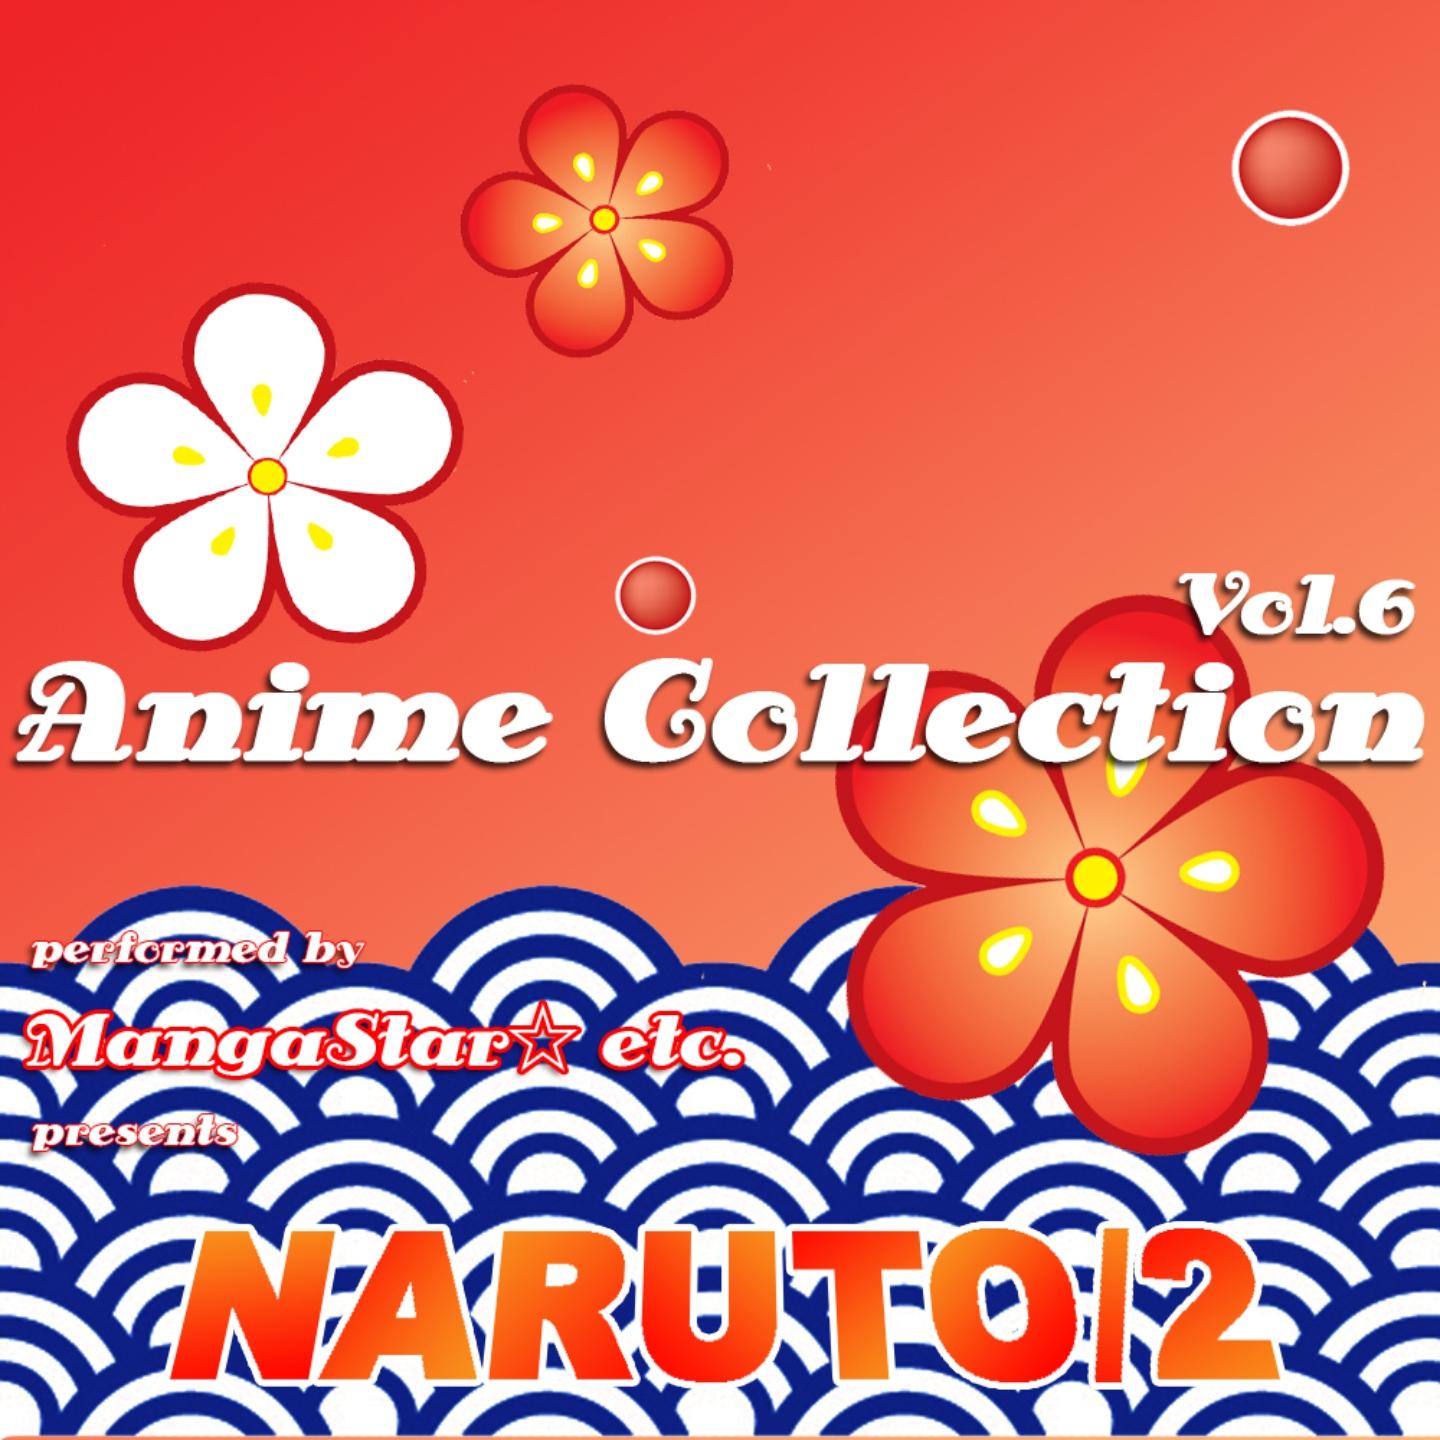 Anime Collection, Vol.6 (Naruto 2)